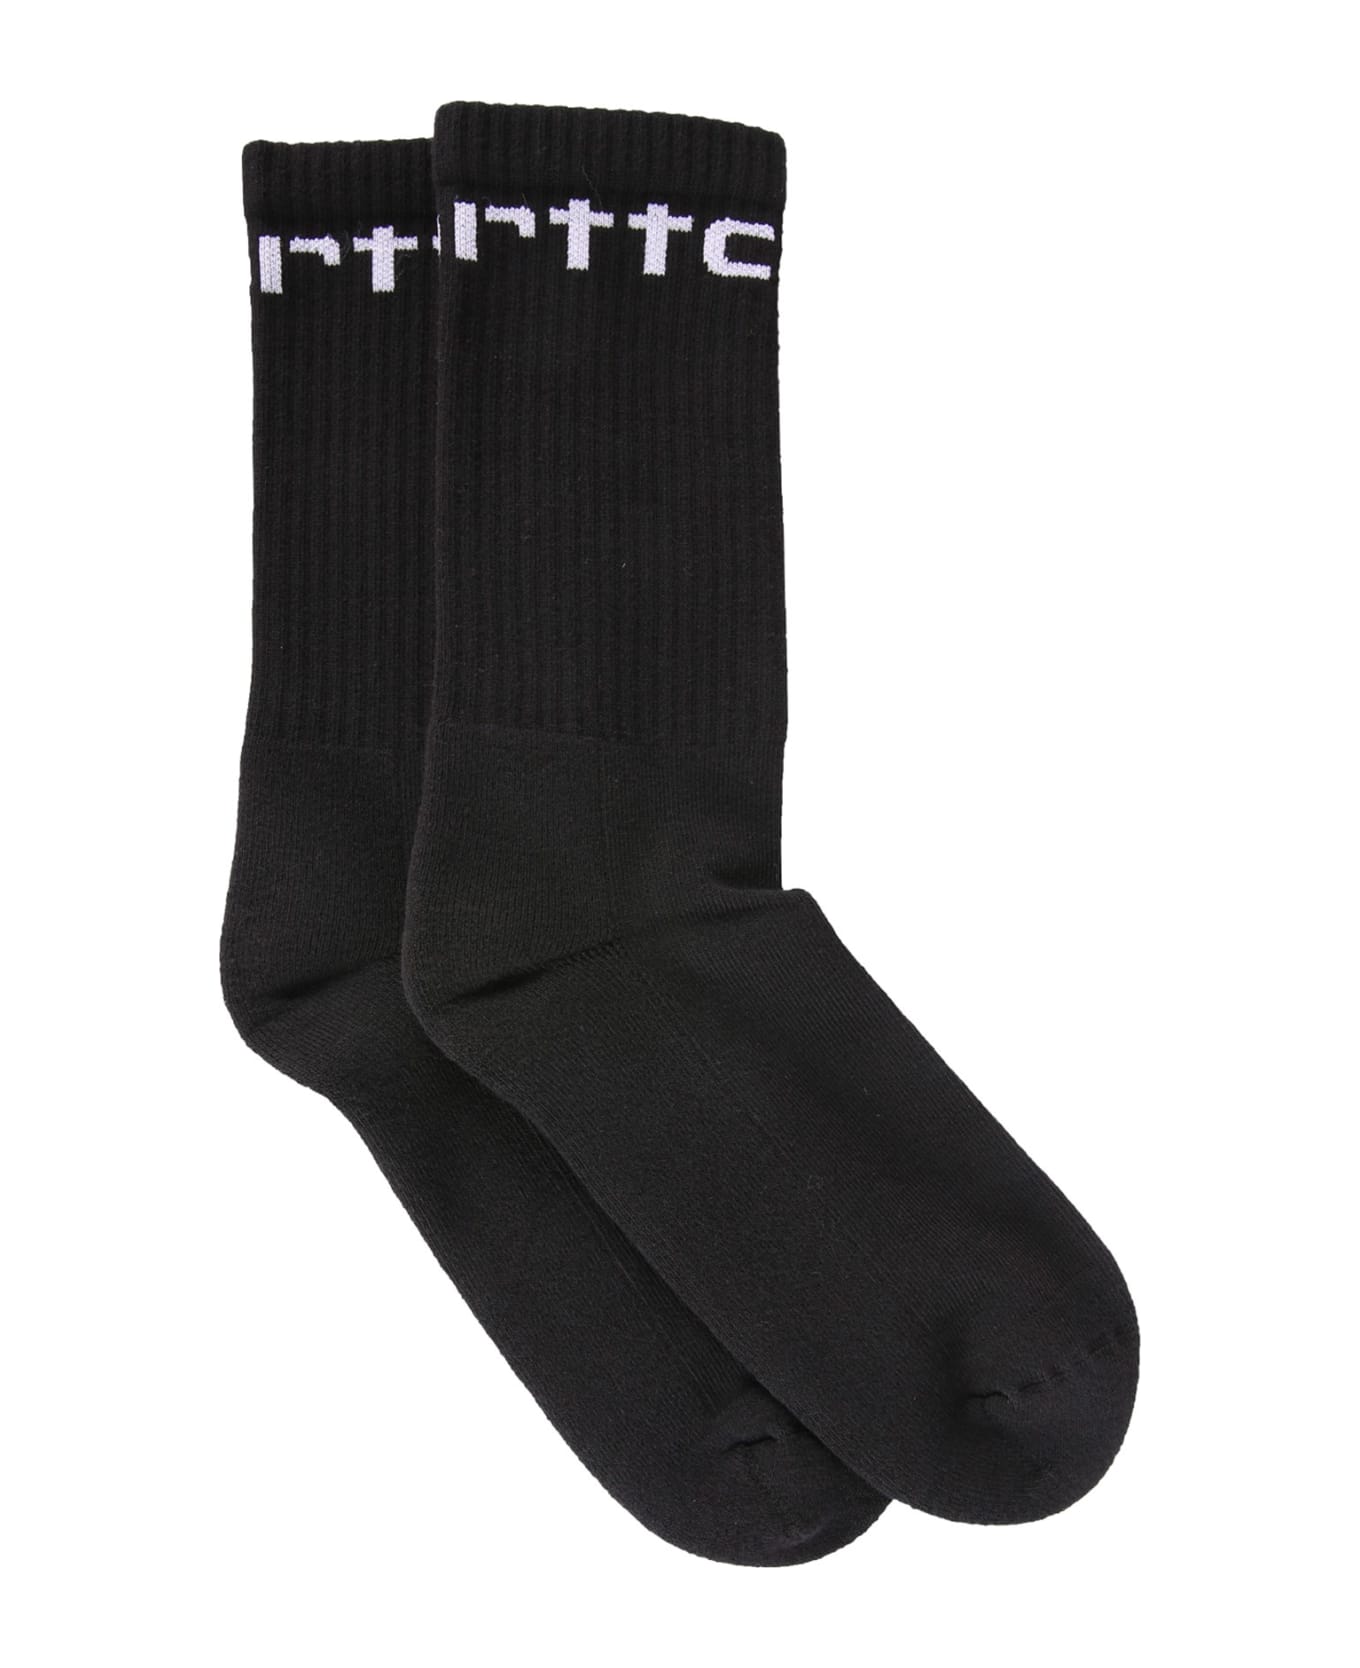 Carhartt Socks With Logo - Black 靴下